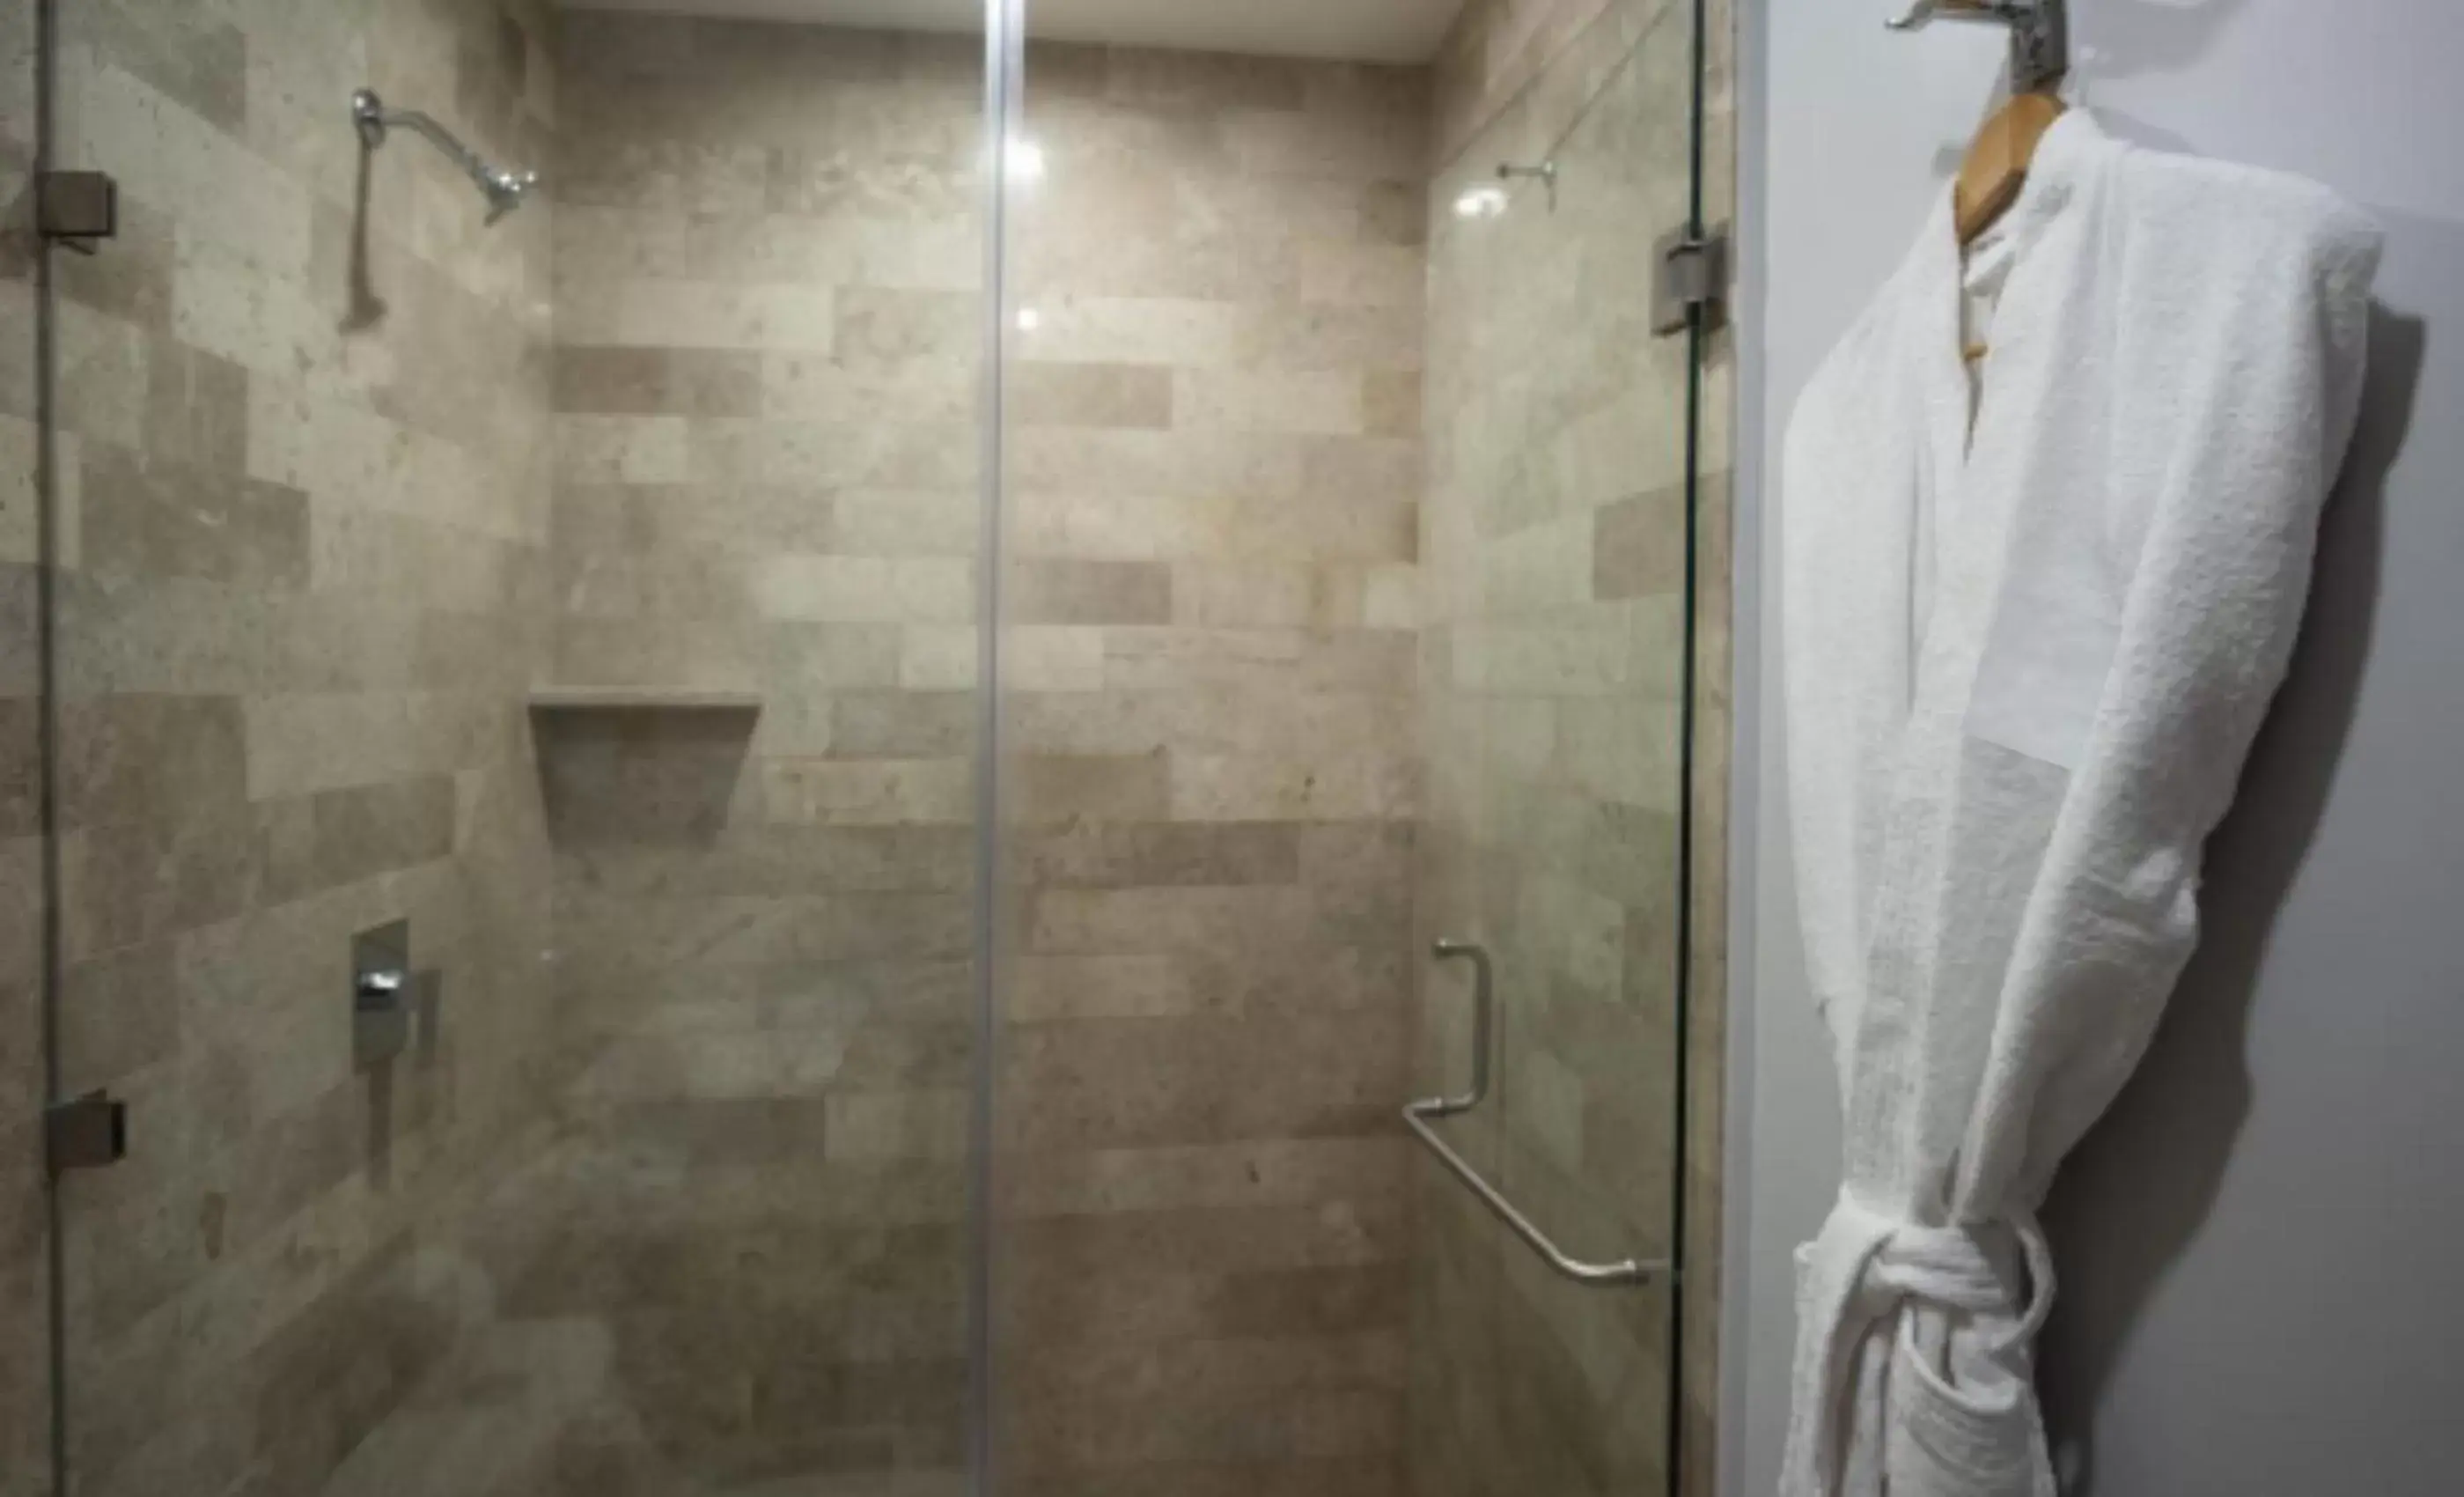 Bathroom in Hotel MX condesa